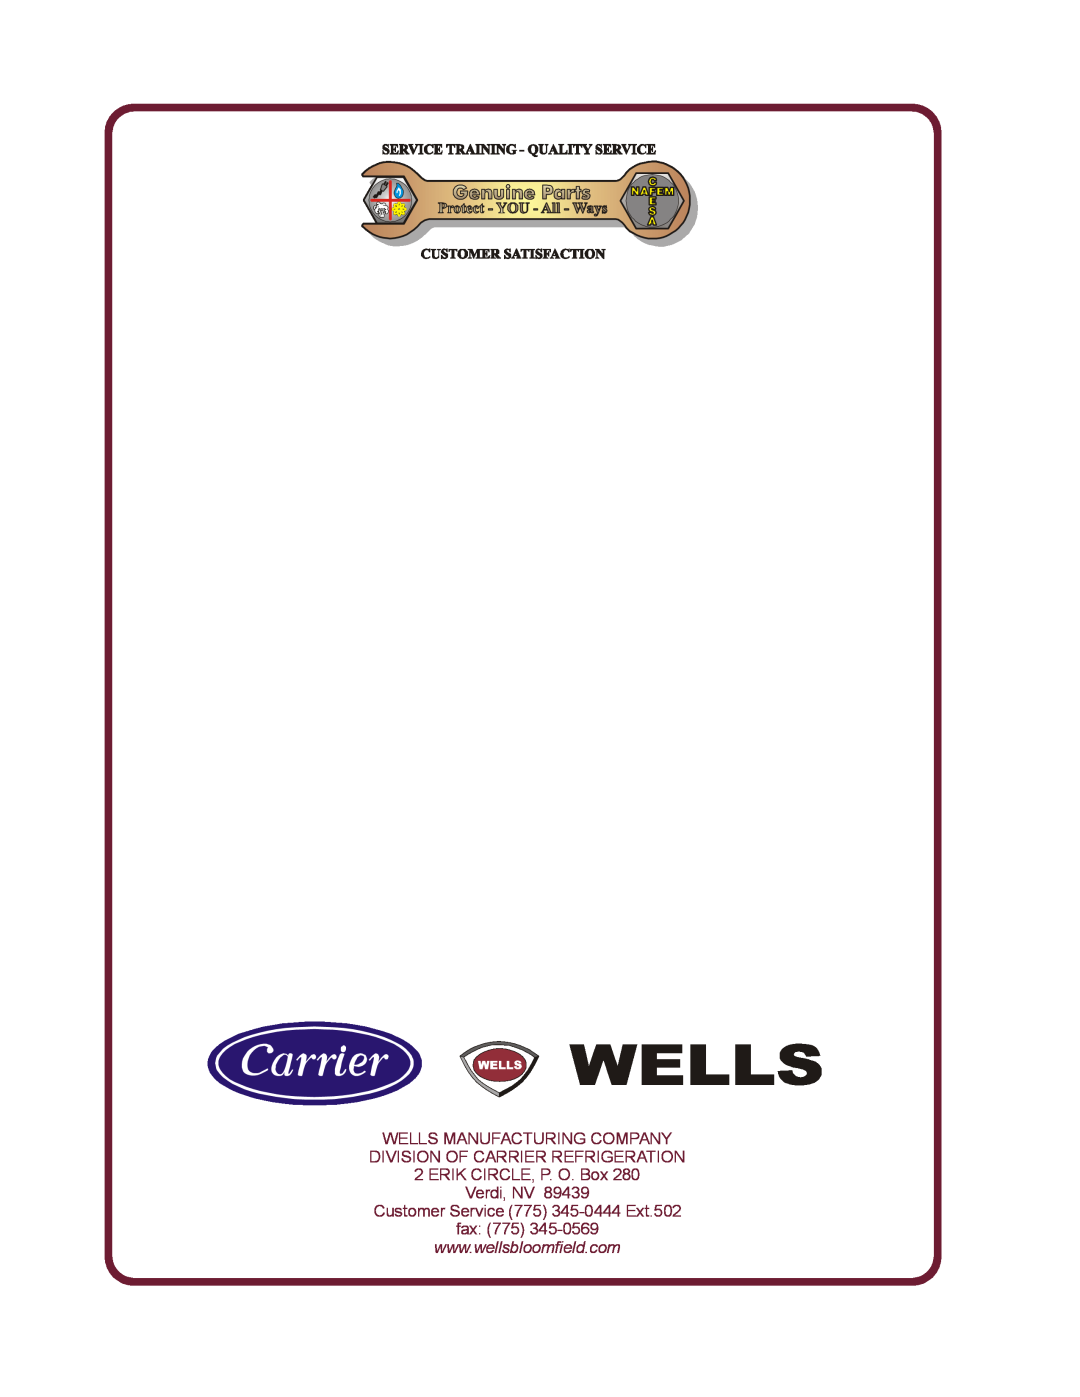 Wells WV-4HSRW Wells Manufacturing Company Division Of Carrier Refrigeration, ERIK CIRCLE, P. O. Box Verdi, NV 